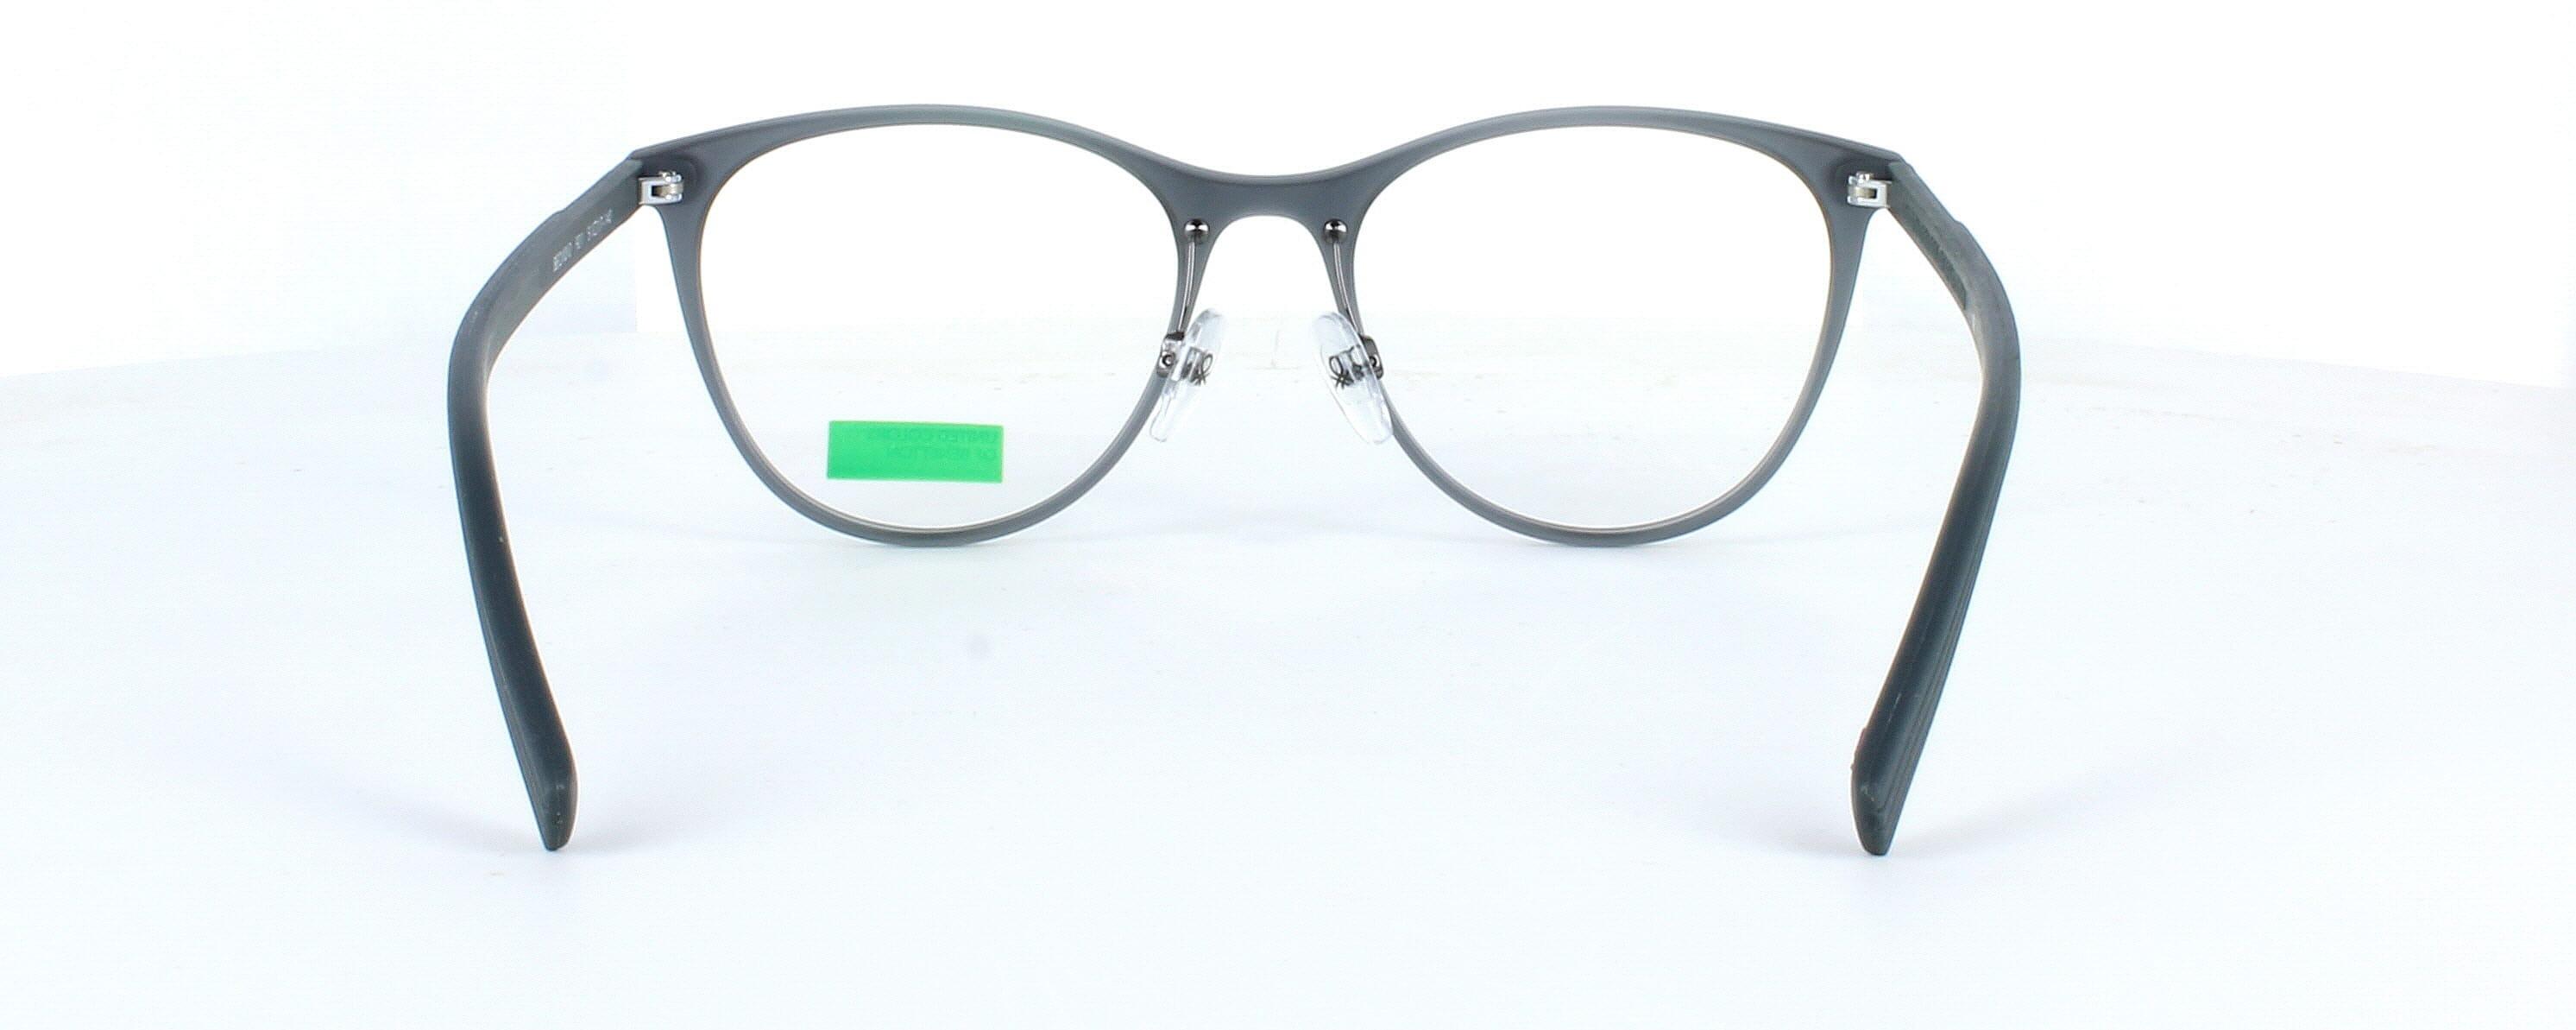 Benetton BEO1012 921 - Ladies dark grey round shaped TR90 lightweight glasses - image view 4